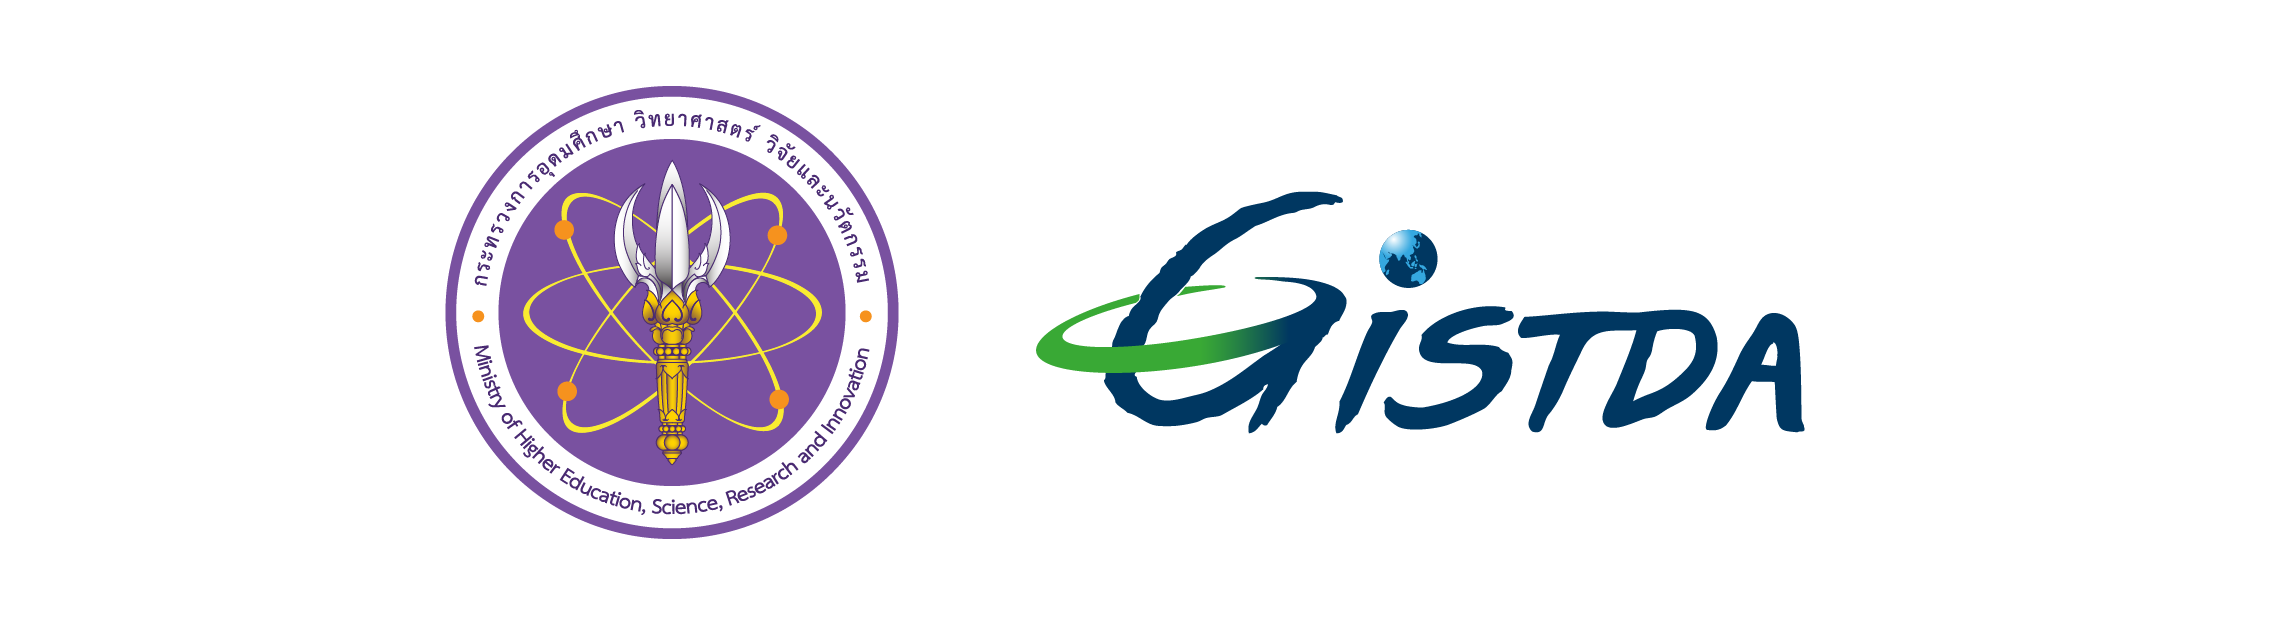 GISTDA Logo